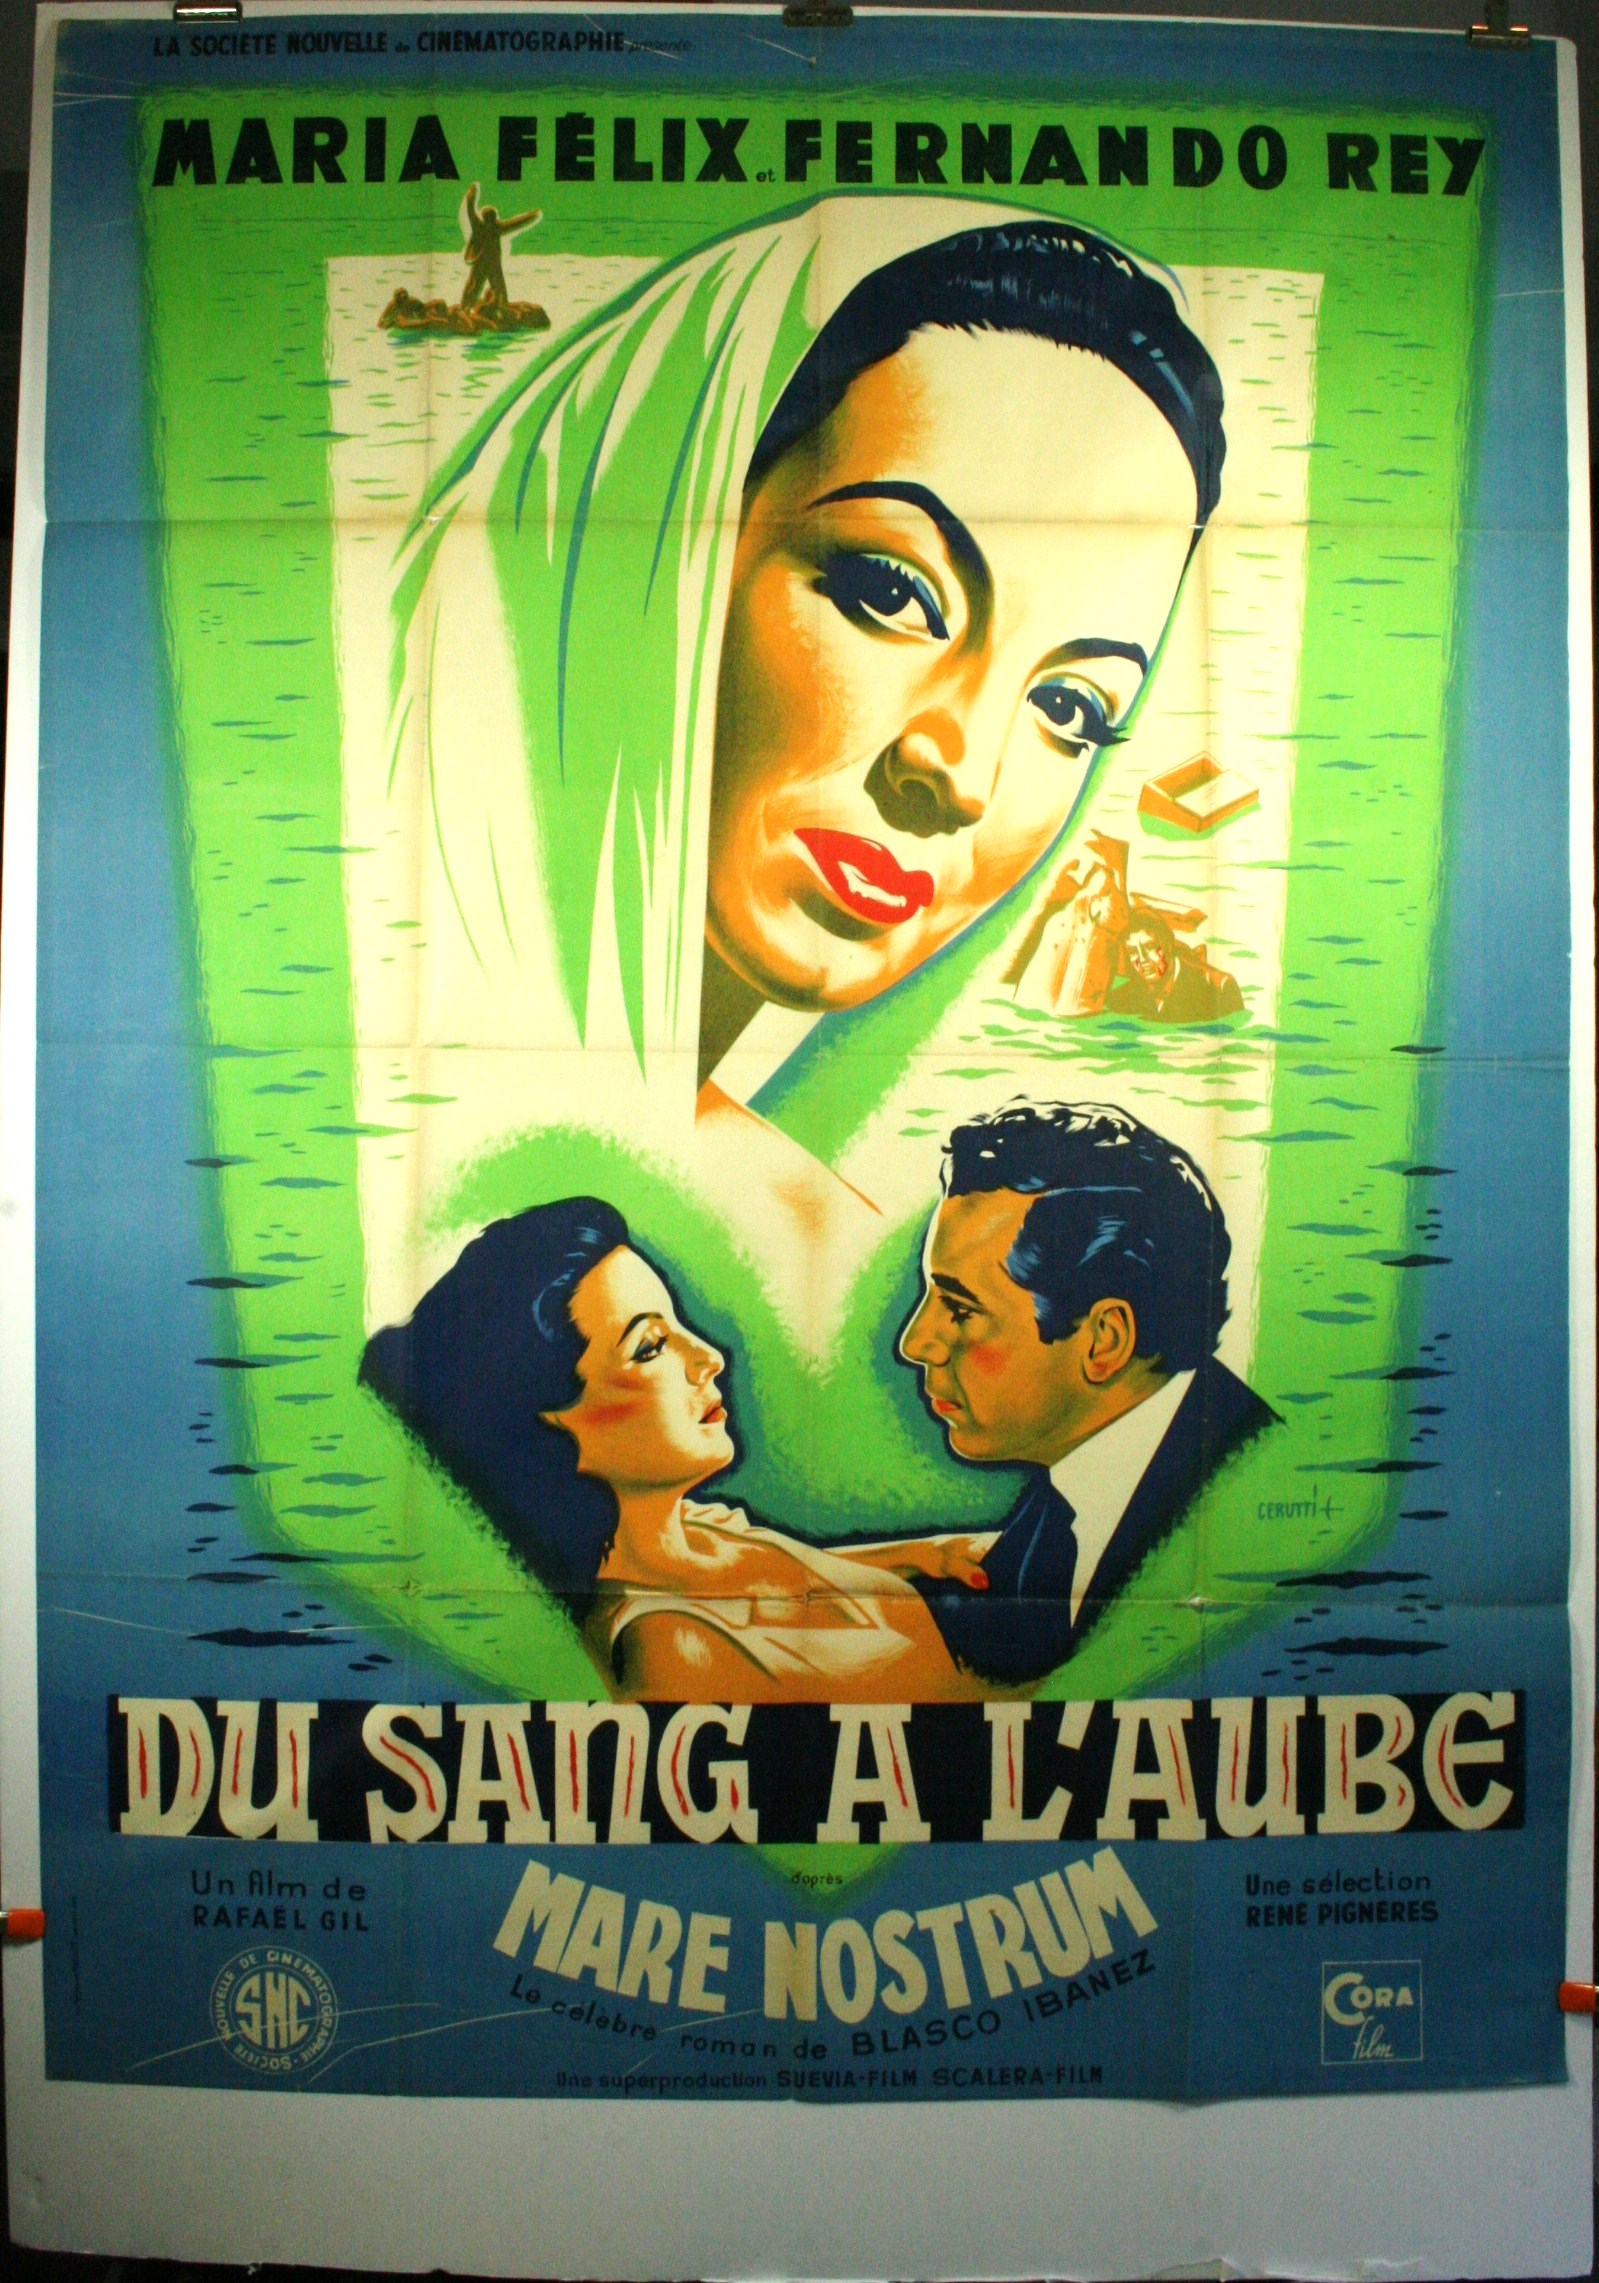 1948. Original French "Grande" Movie Poster (47" x 63")...